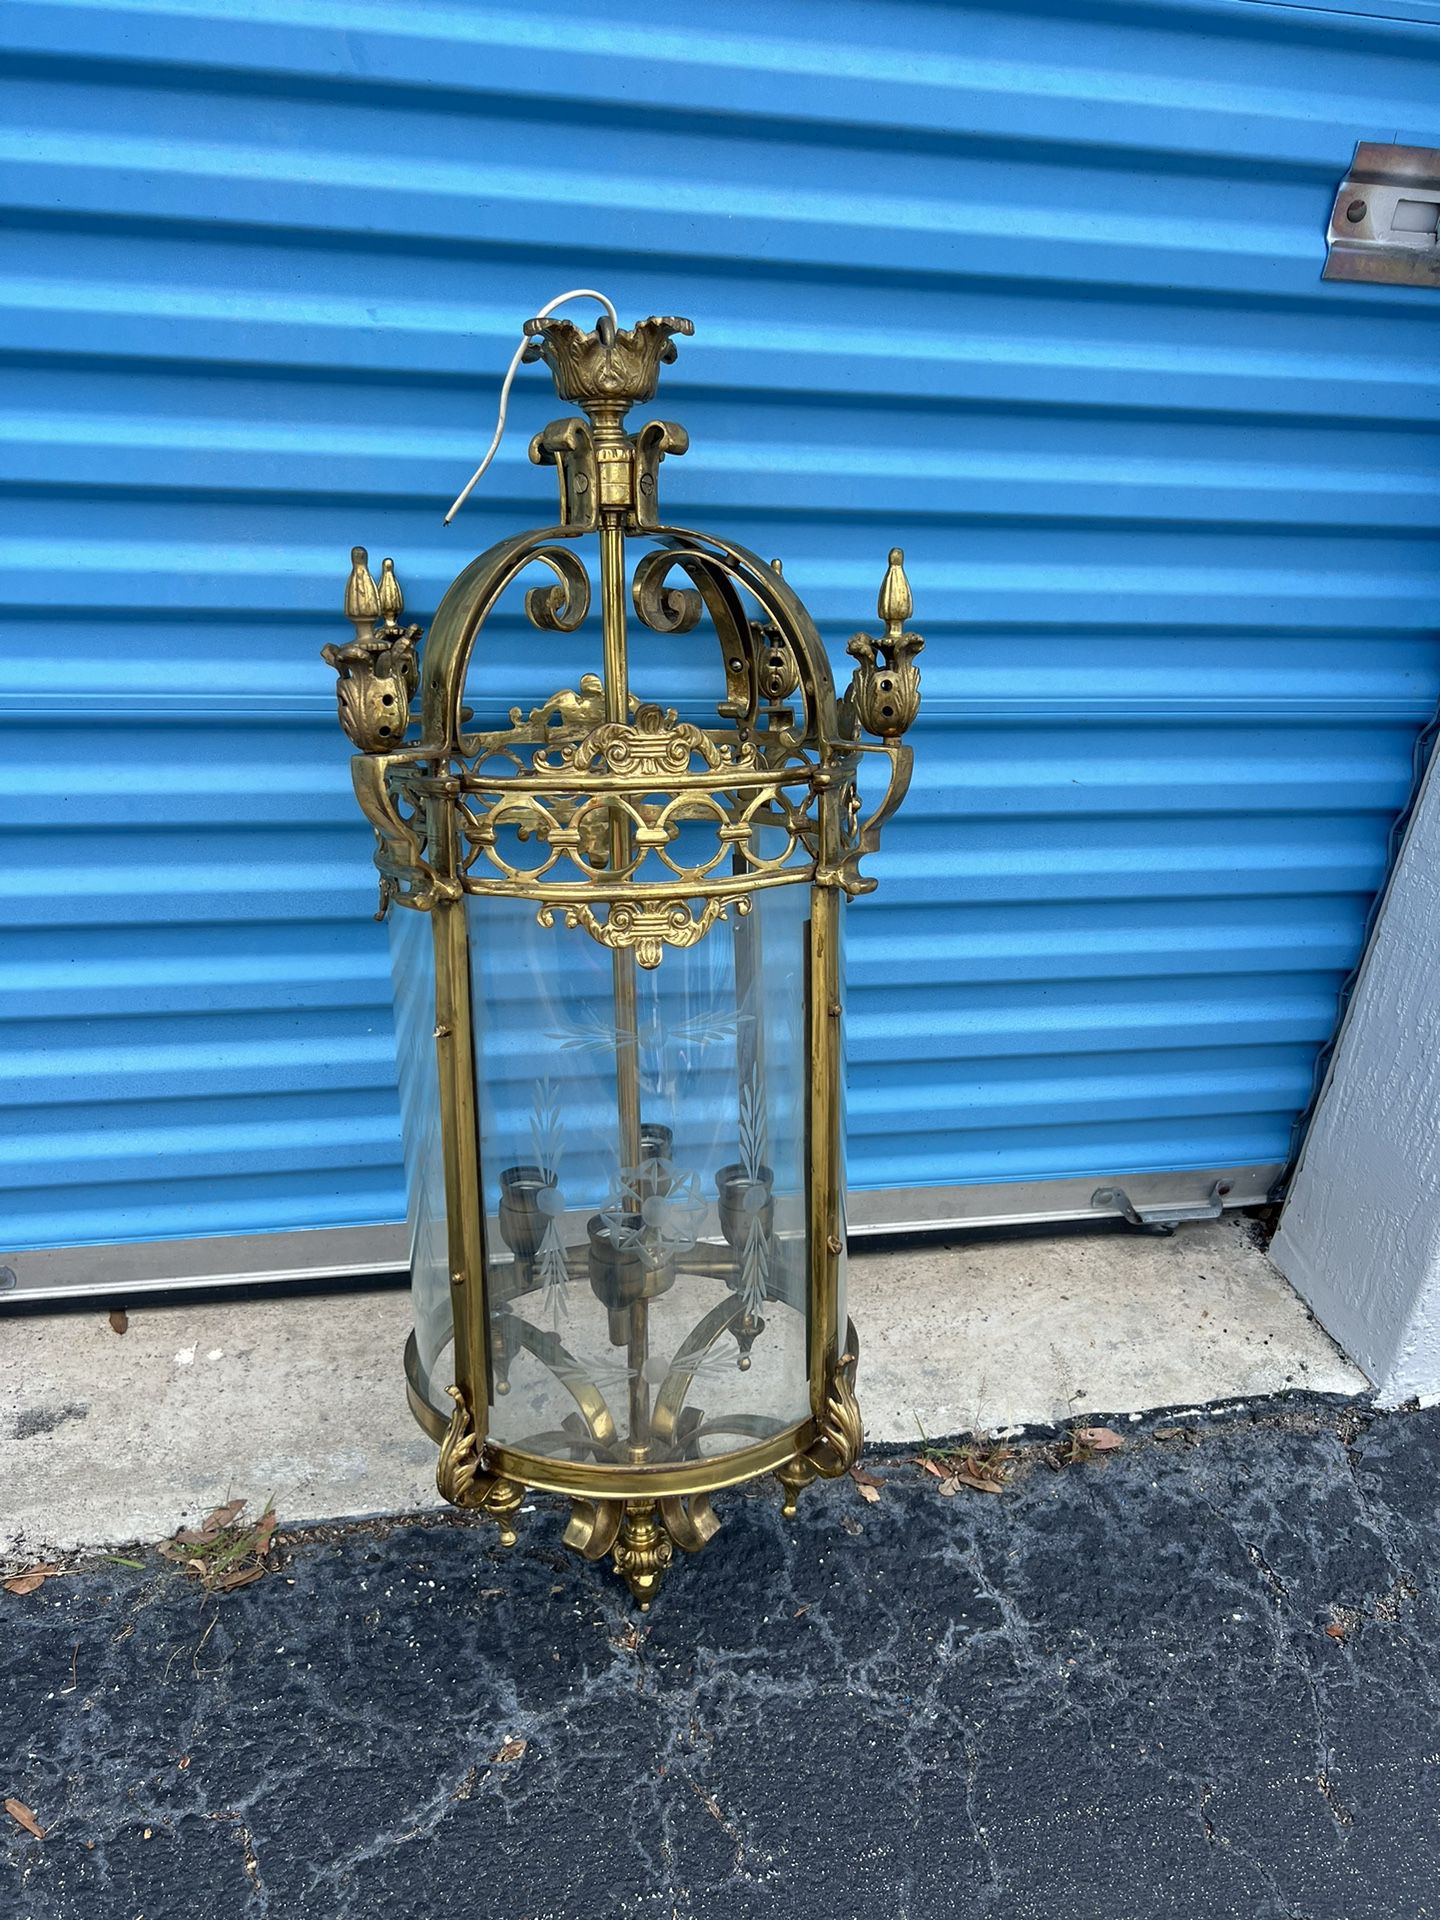 Antique Vintage Art Nouveau Brass Gold Gilded Louis XVI Style Lantern! Missing one glass Pane. 37x19x19in